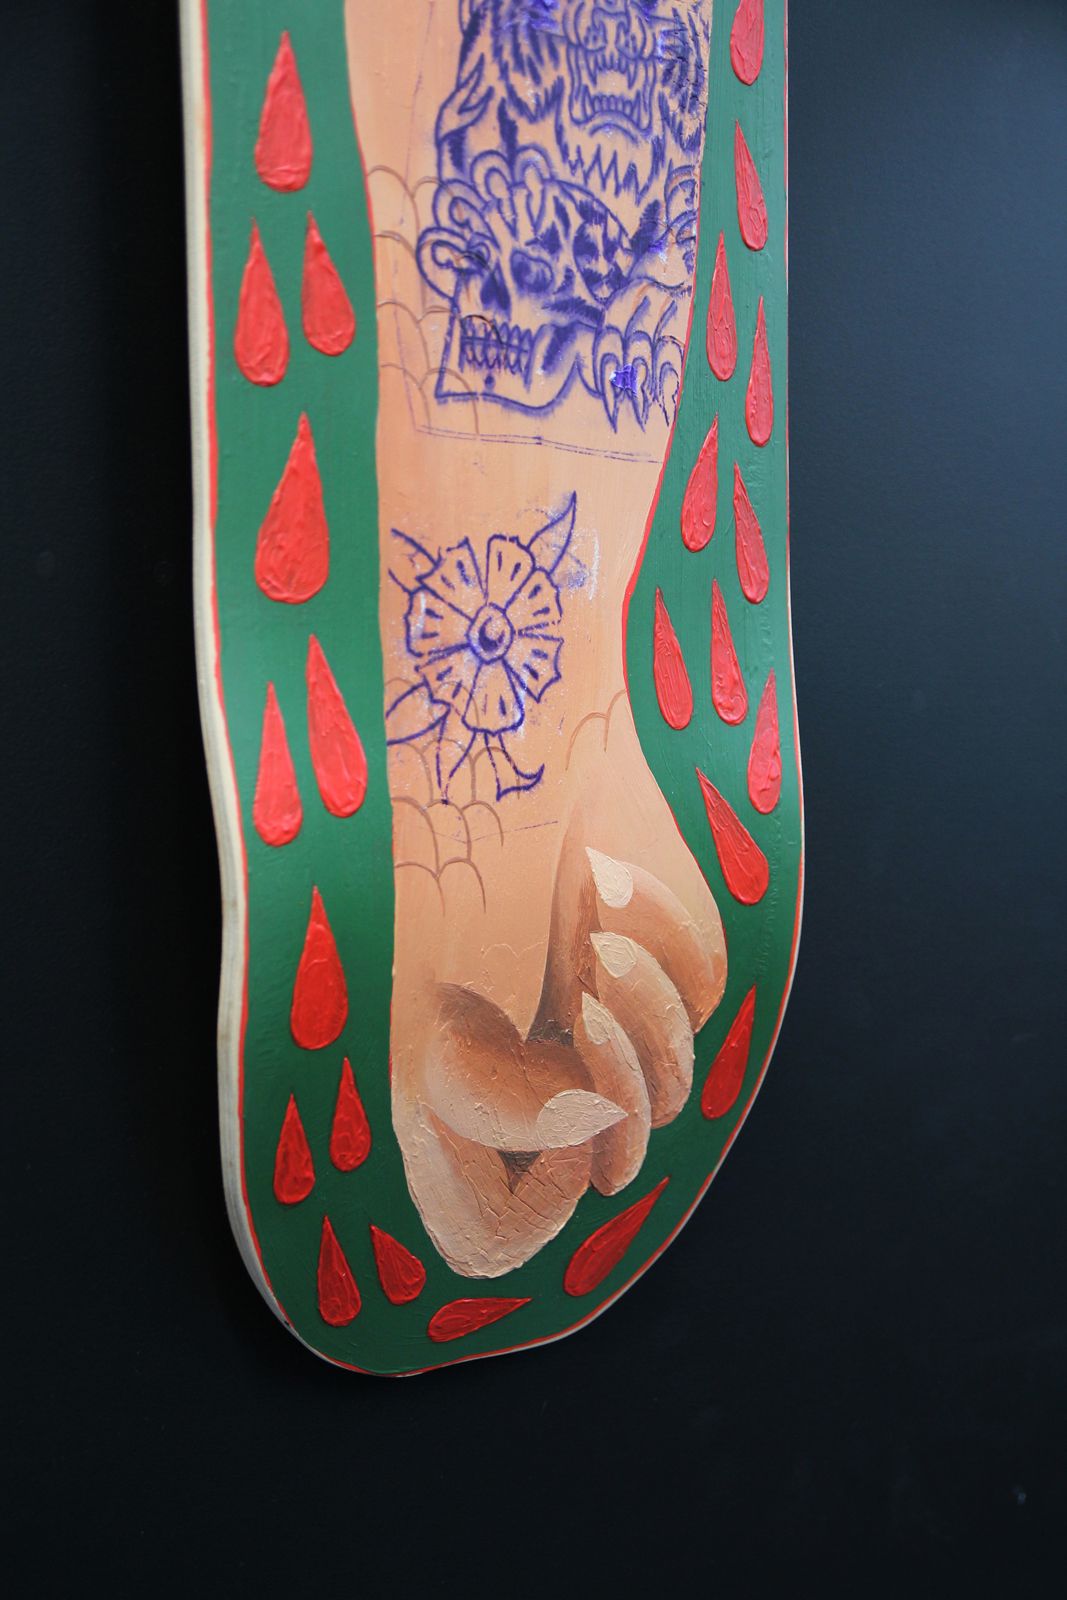 Apercu Des Boards De La Nouvelle Edition Skateboarding Is Blankable 11